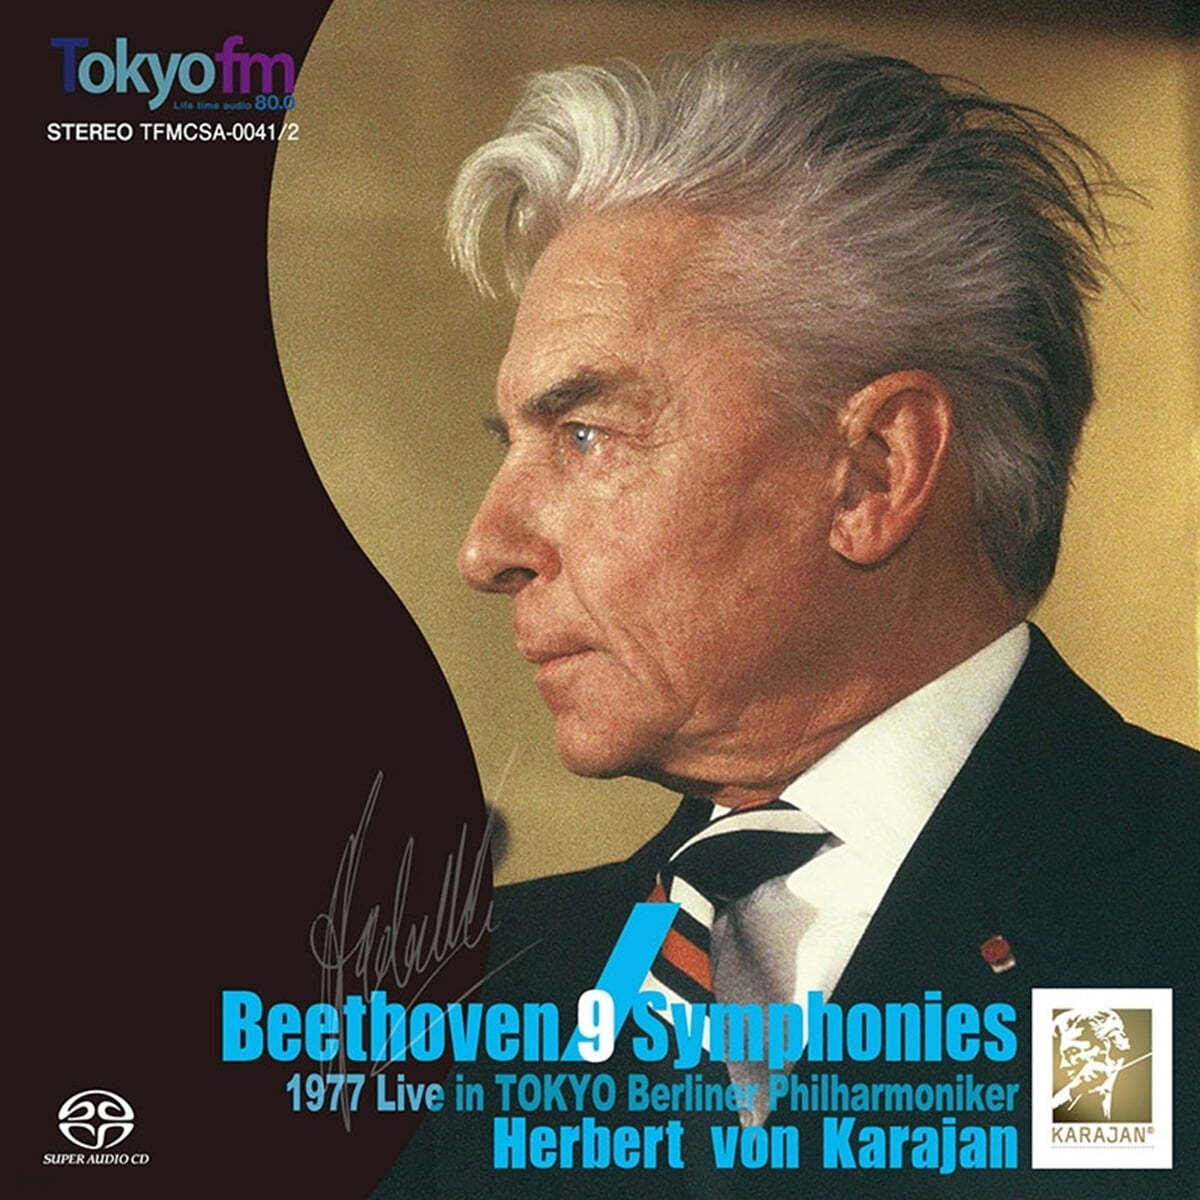 Herbert von Karajan 베토벤: 교향곡 전곡집 - 헤르베르트 폰 카라얀 (Beethoven: 9 Symphonies) 